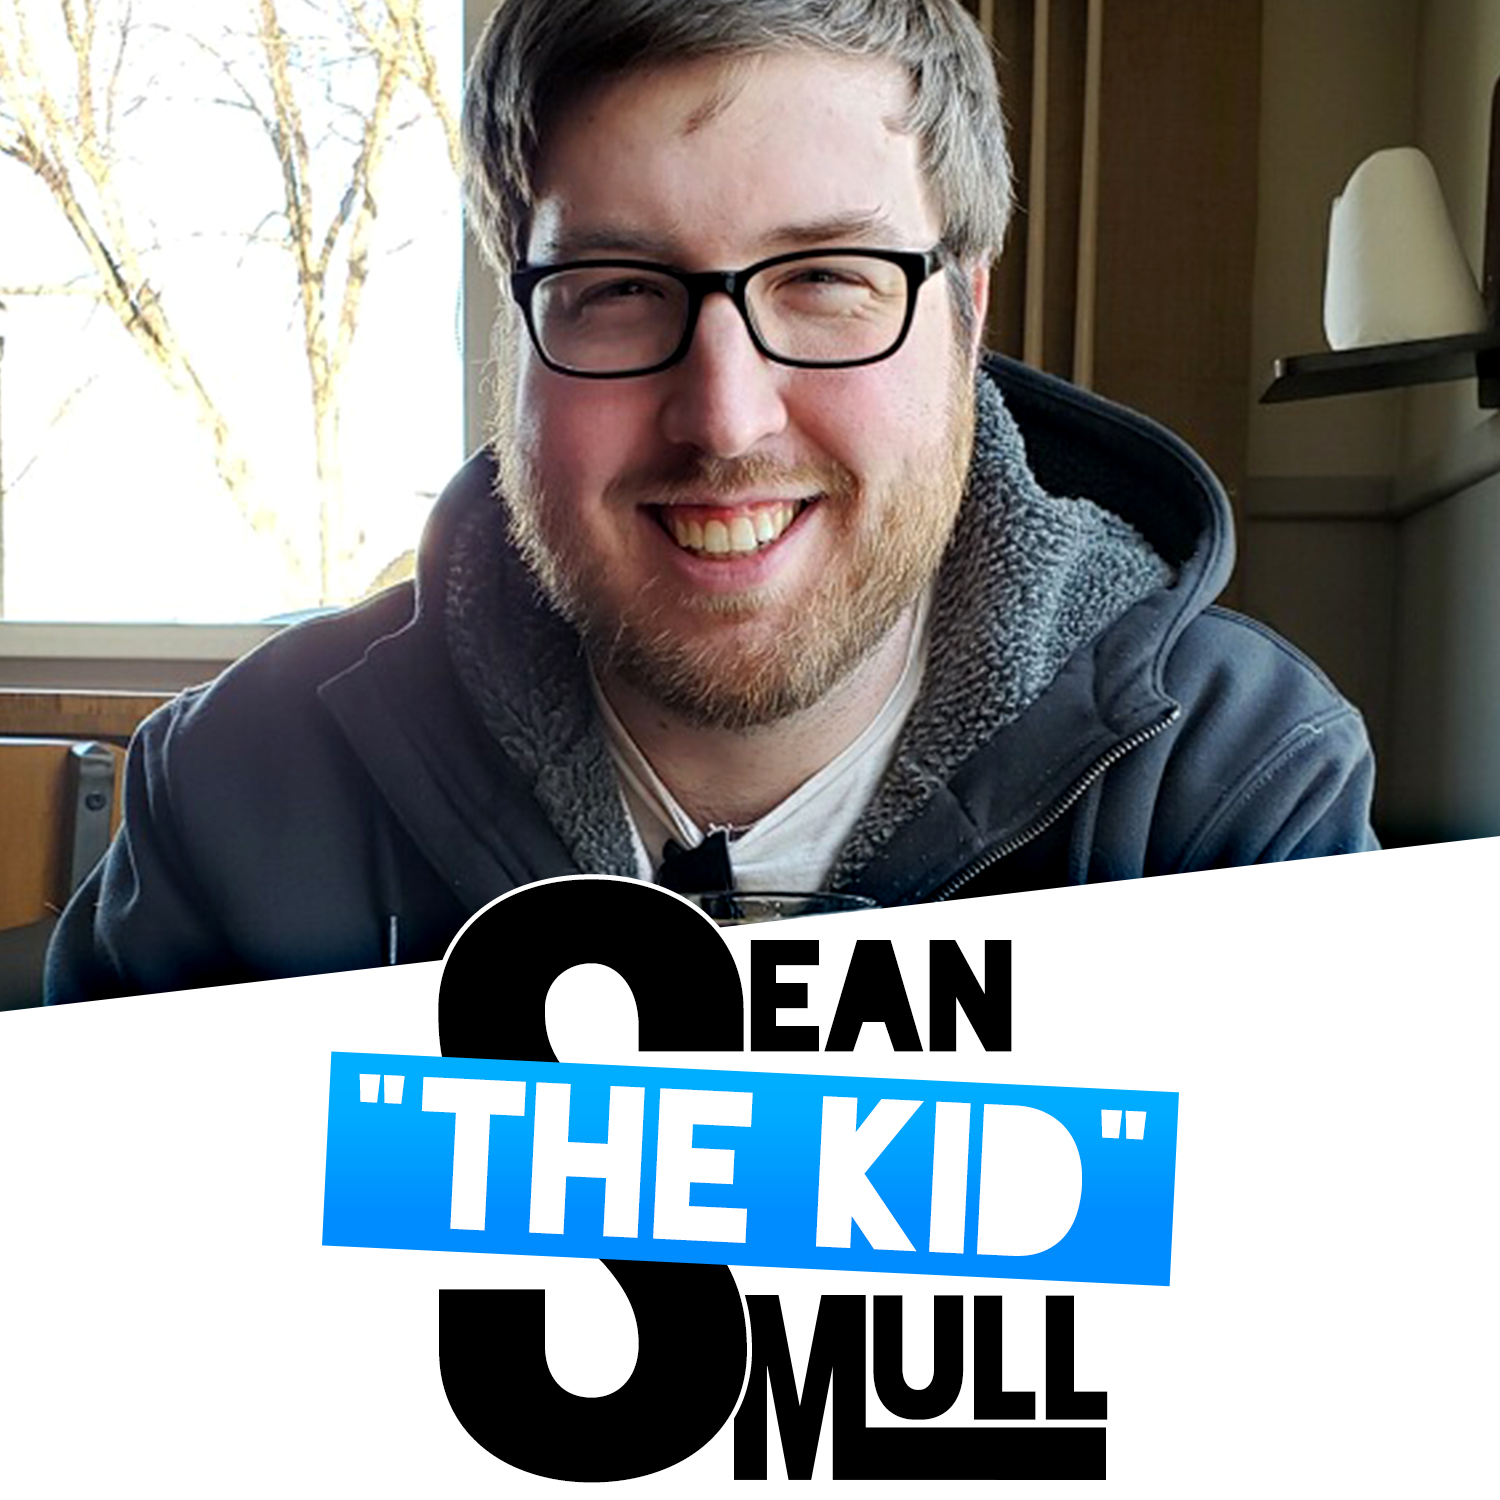 Sean "The Kid" Mull